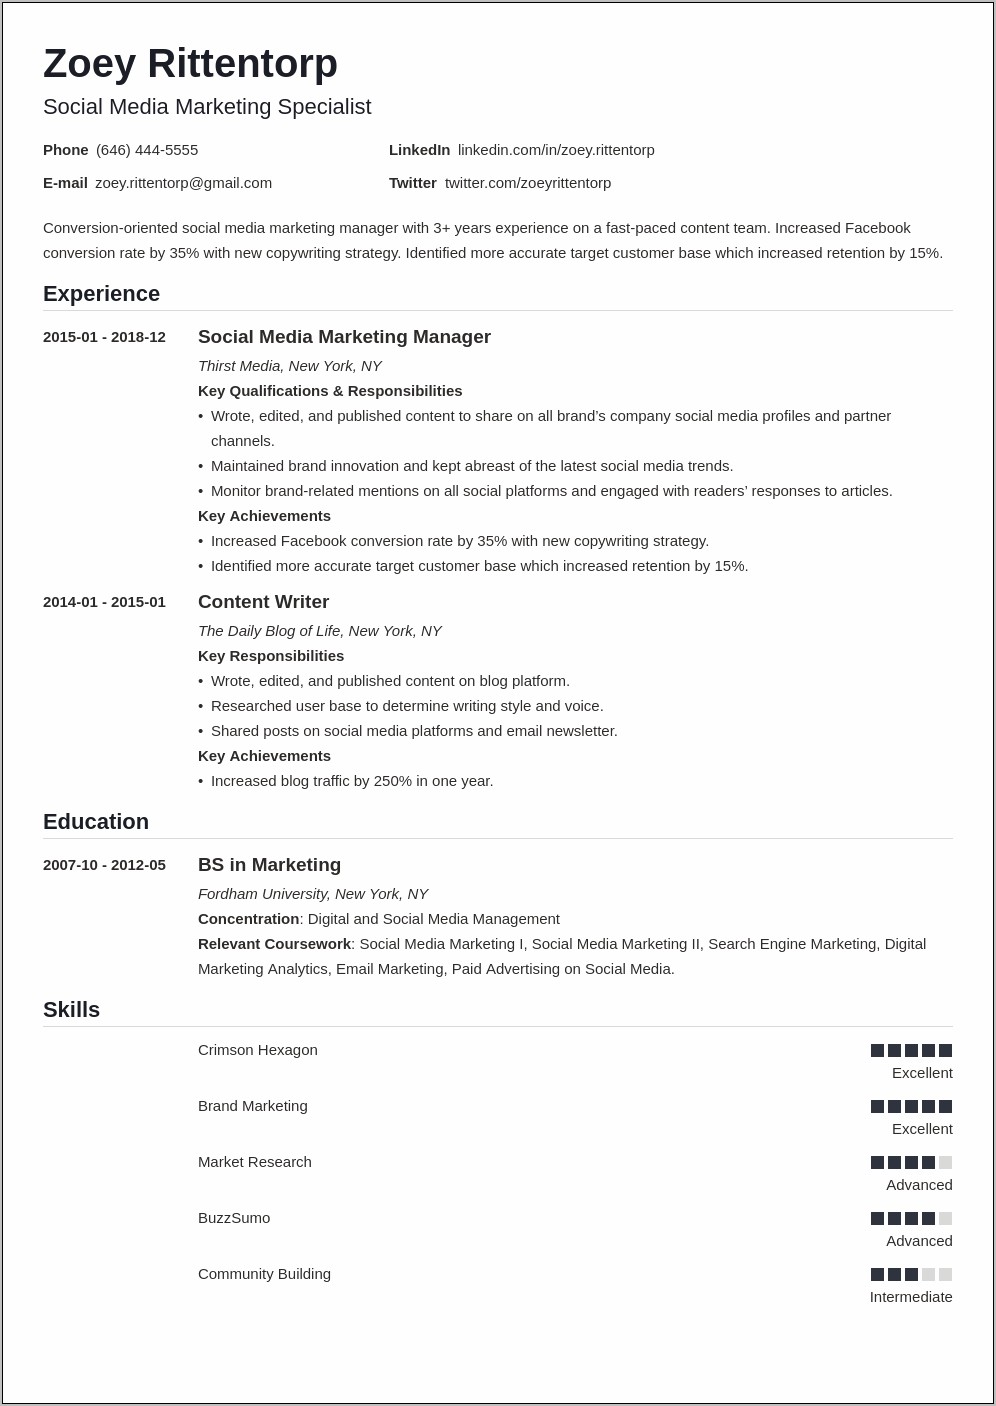 Job Description For Social Media Manager Resume